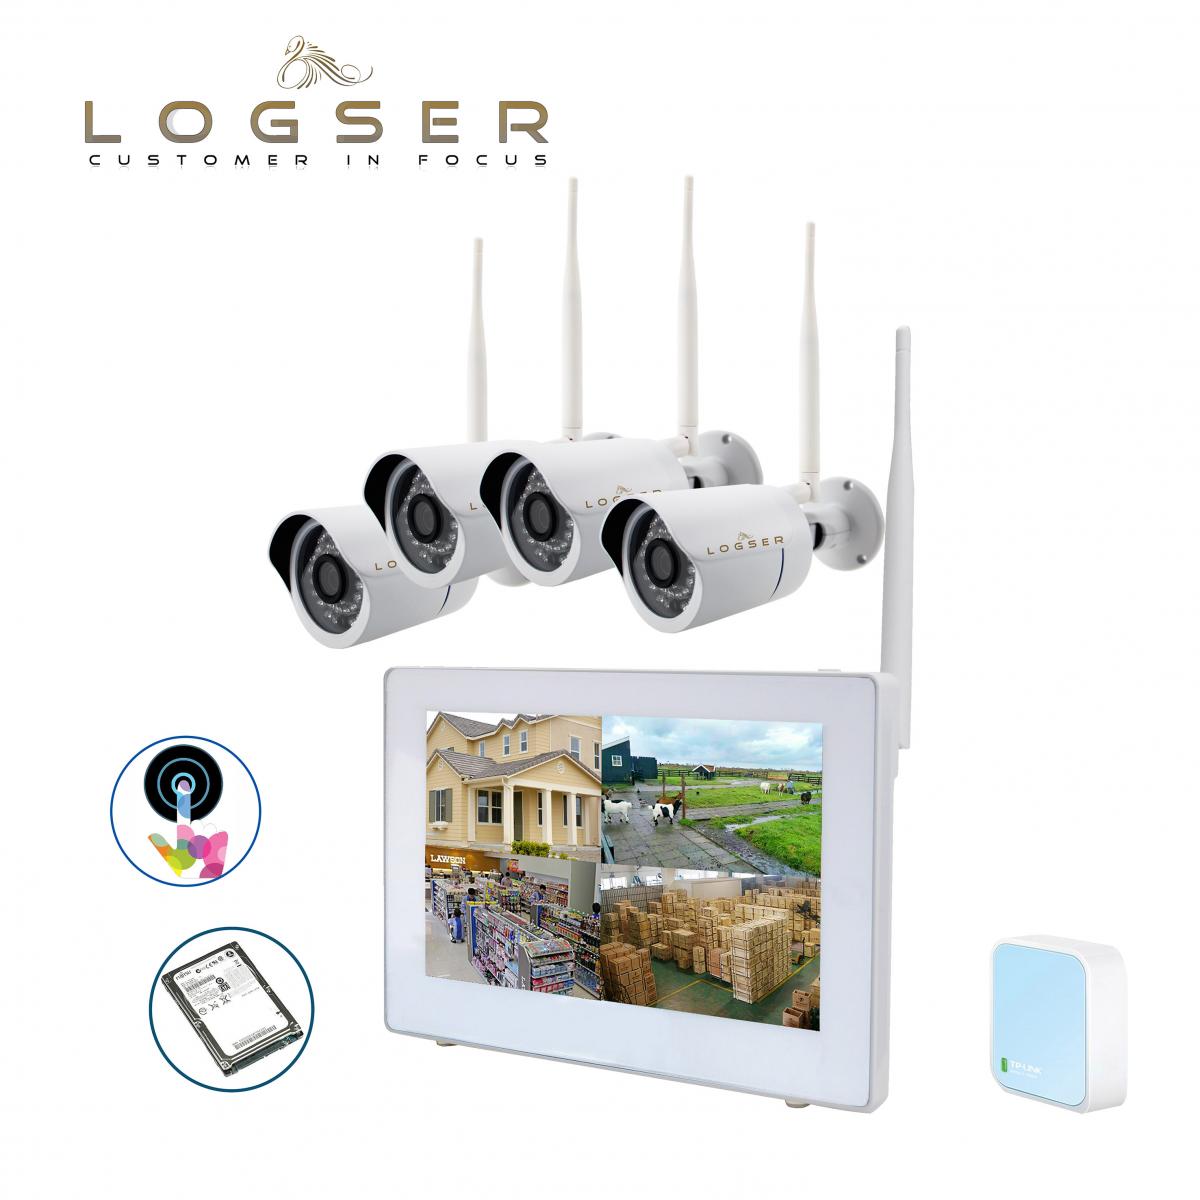 LOGSER AG - 9 Zoll Full-Touch inkl. Wifi Adapter, Funk Videoüberwachung HD 720p Echtzeit, 500GB SATA Festplatte, 4x Nachtsicht Kamera